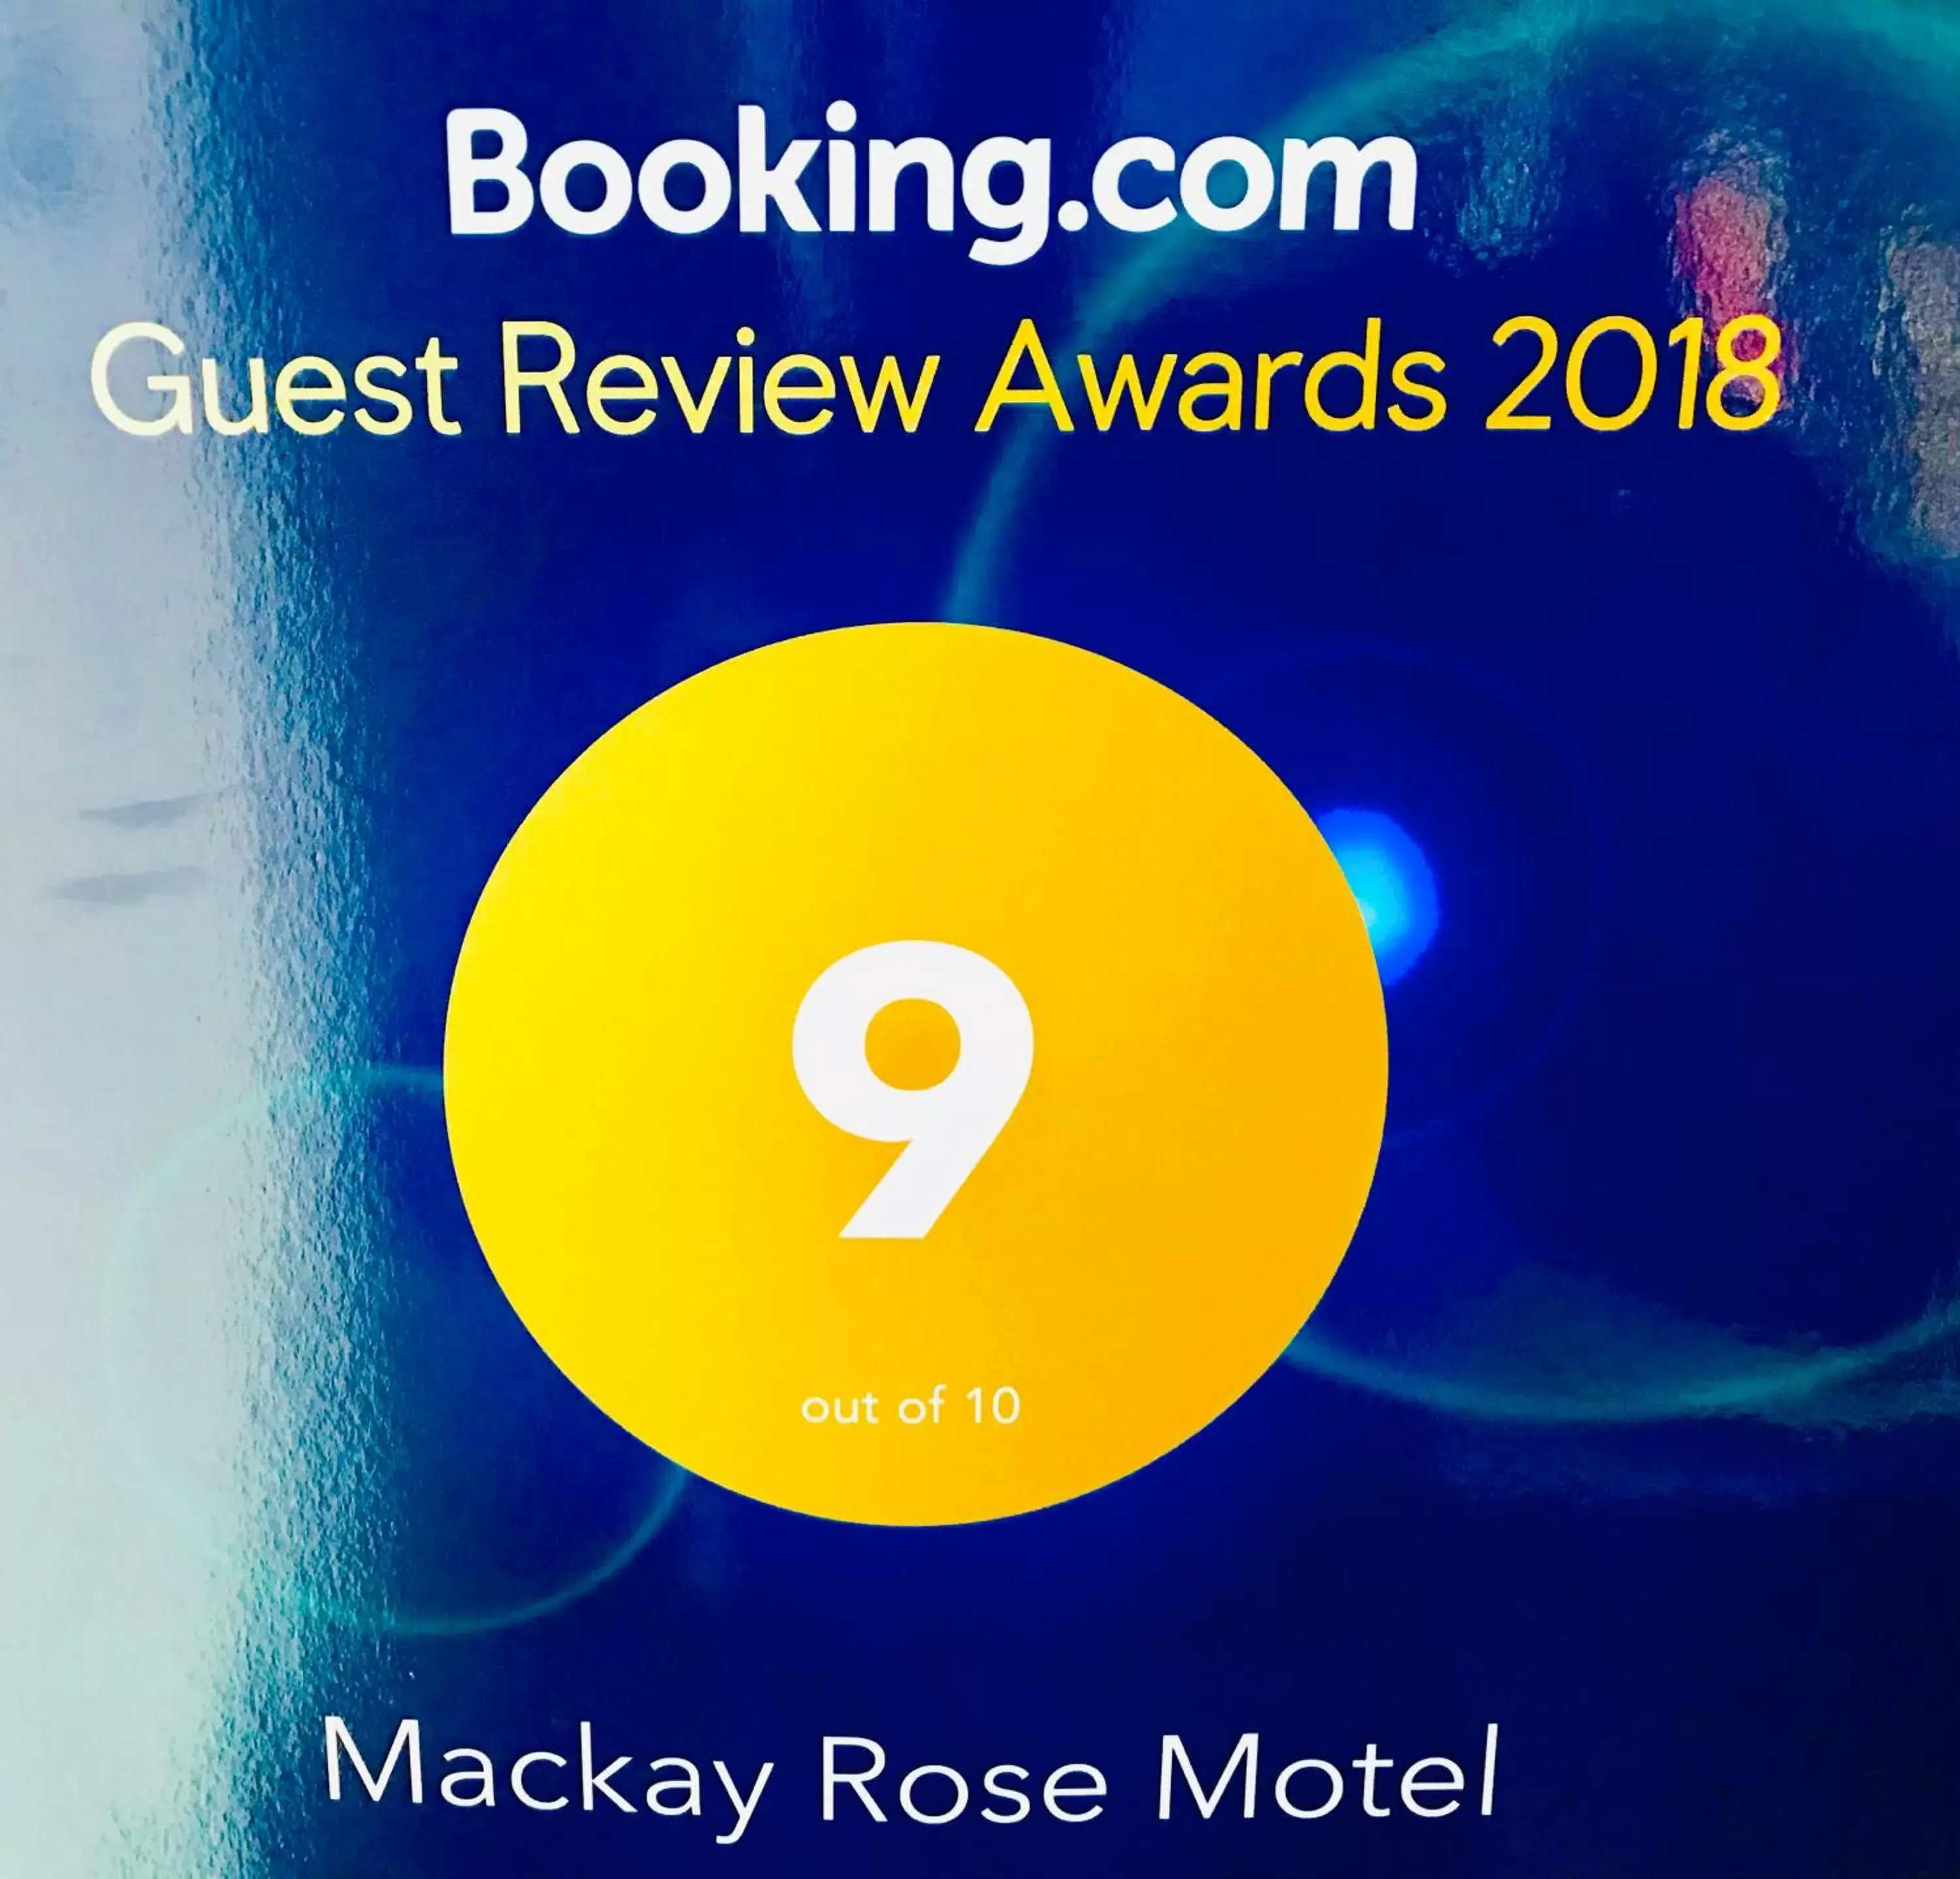 Certificate/Award in Mackay Rose Motel